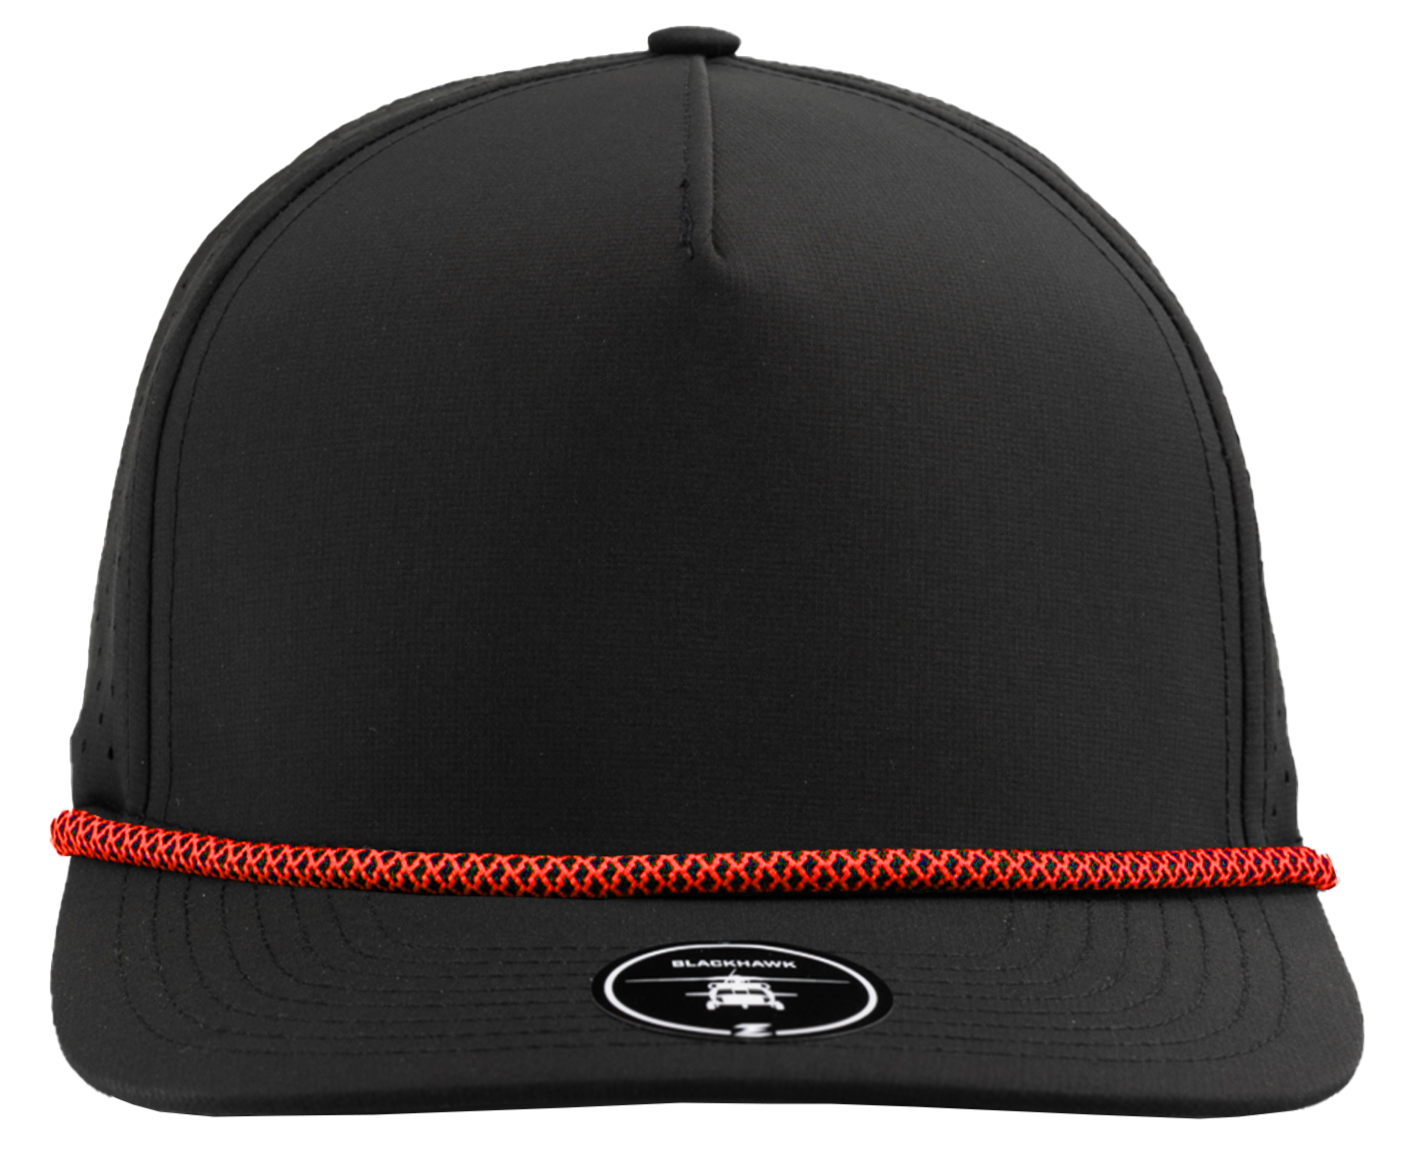 BLACKHAWK R+ (Rope Brim)-Water Repellent hat-Zapped Headwear-Black/ Red Chainlink Rope-Zapped Headwear-5 panel - rope hat - golf hat